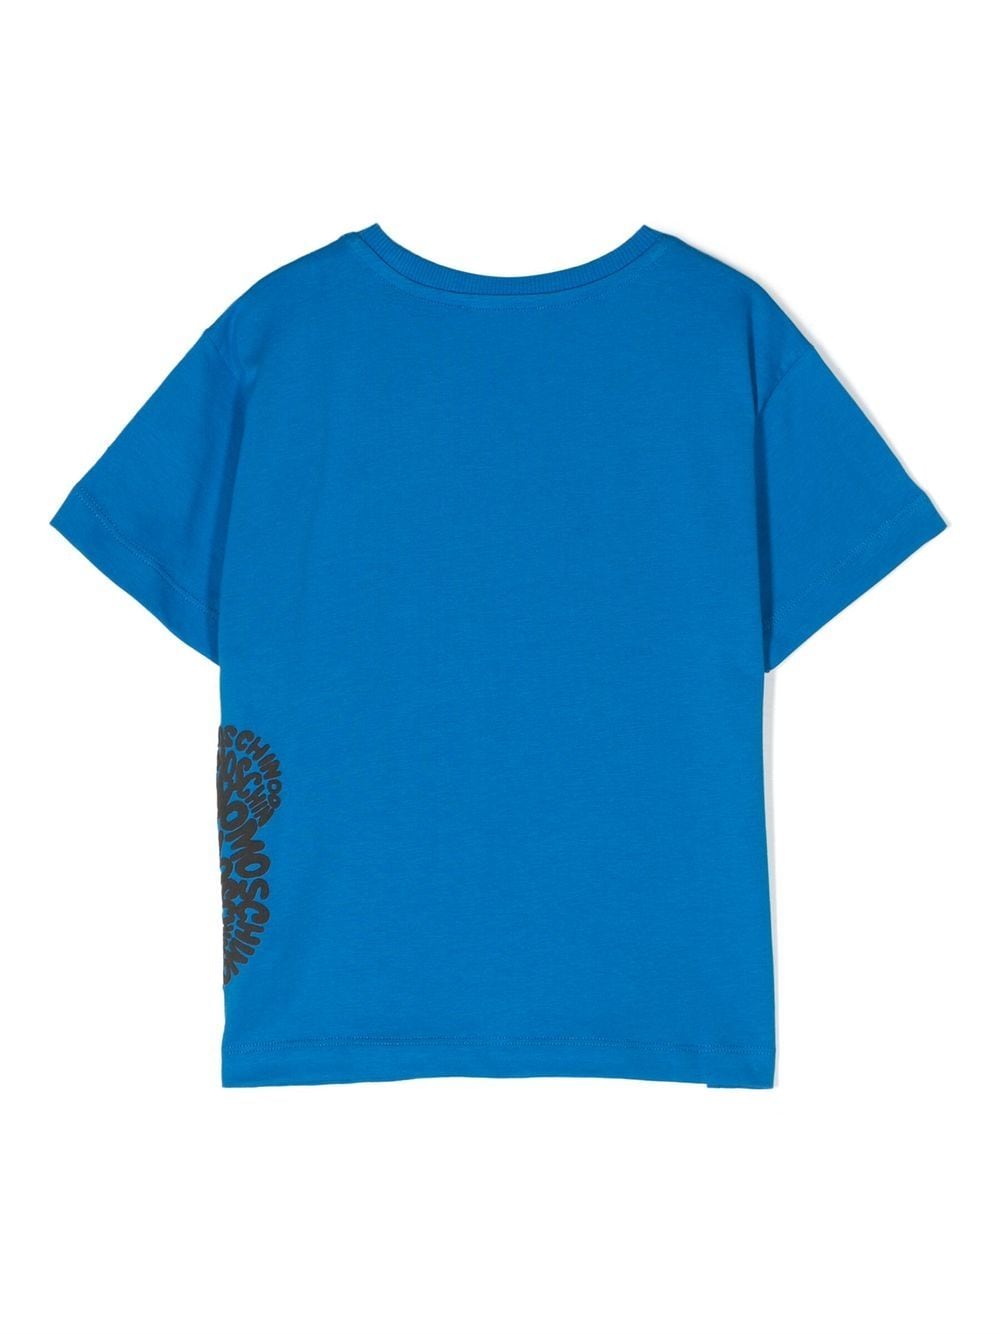 T-shirt blu per bambini con stampa